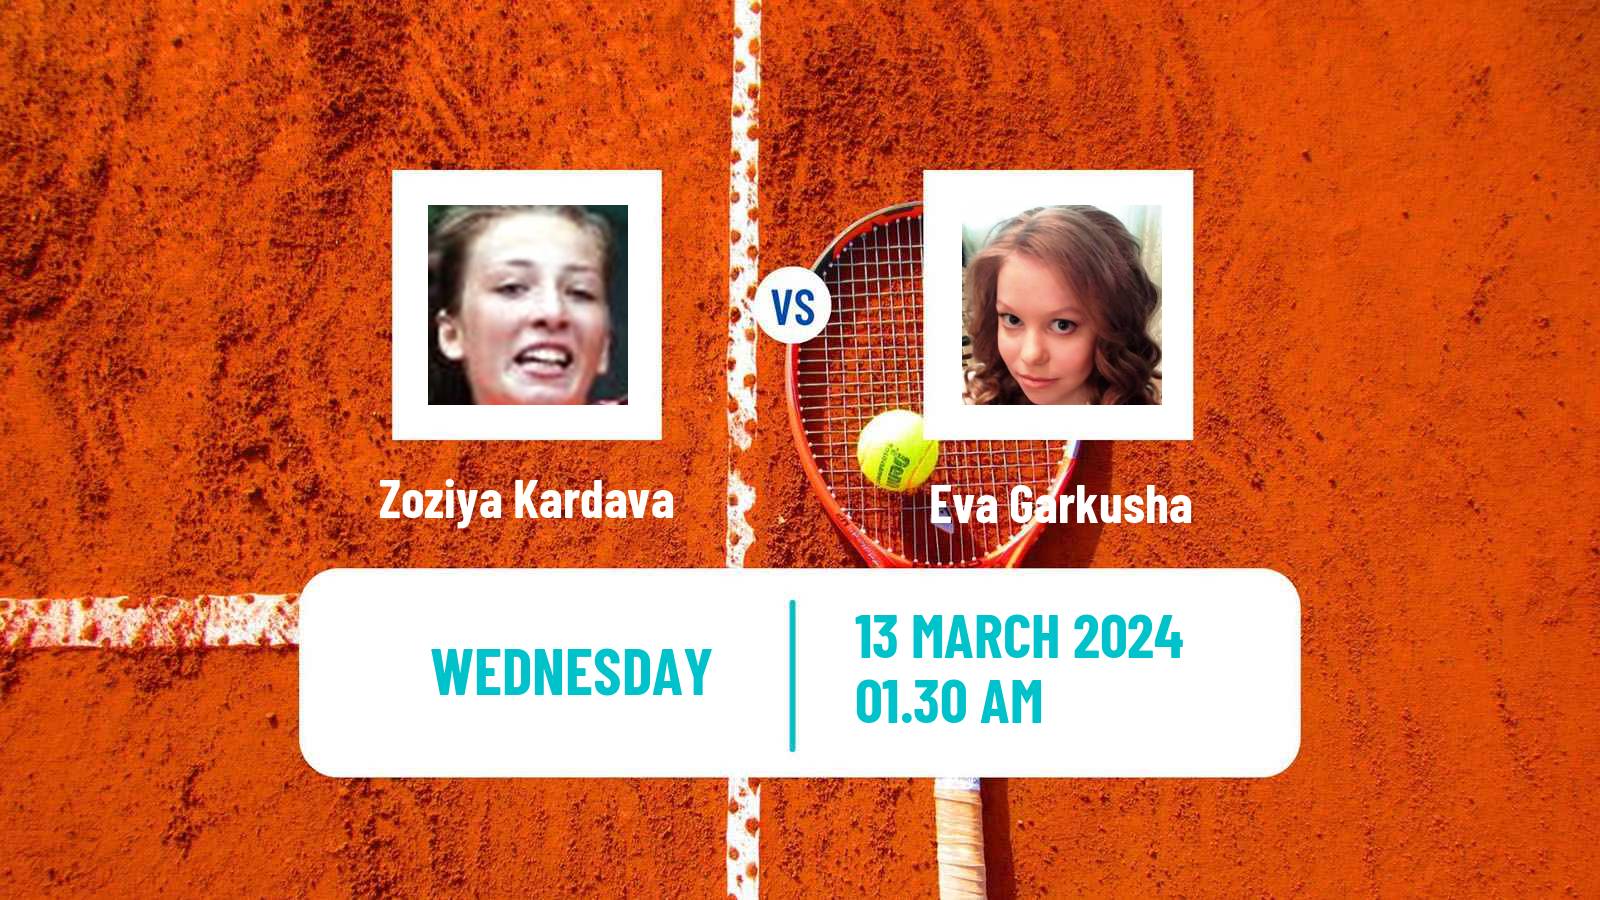 Tennis ITF W15 Karaganda 2 Women Zoziya Kardava - Eva Garkusha